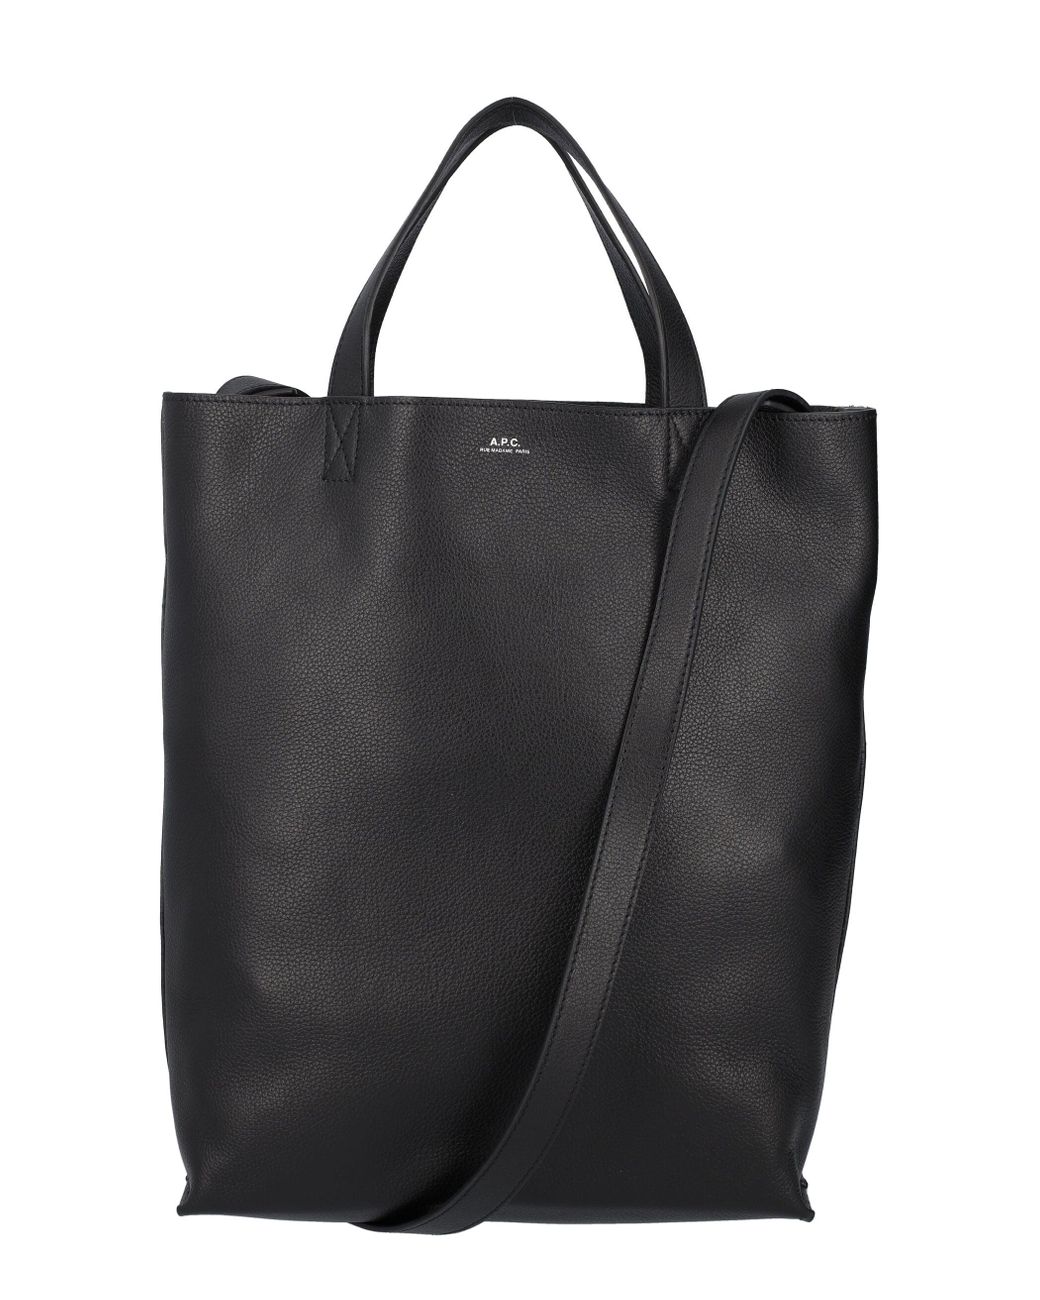 A.P.C. Maiko Medium Shopping Bag in Black | Lyst